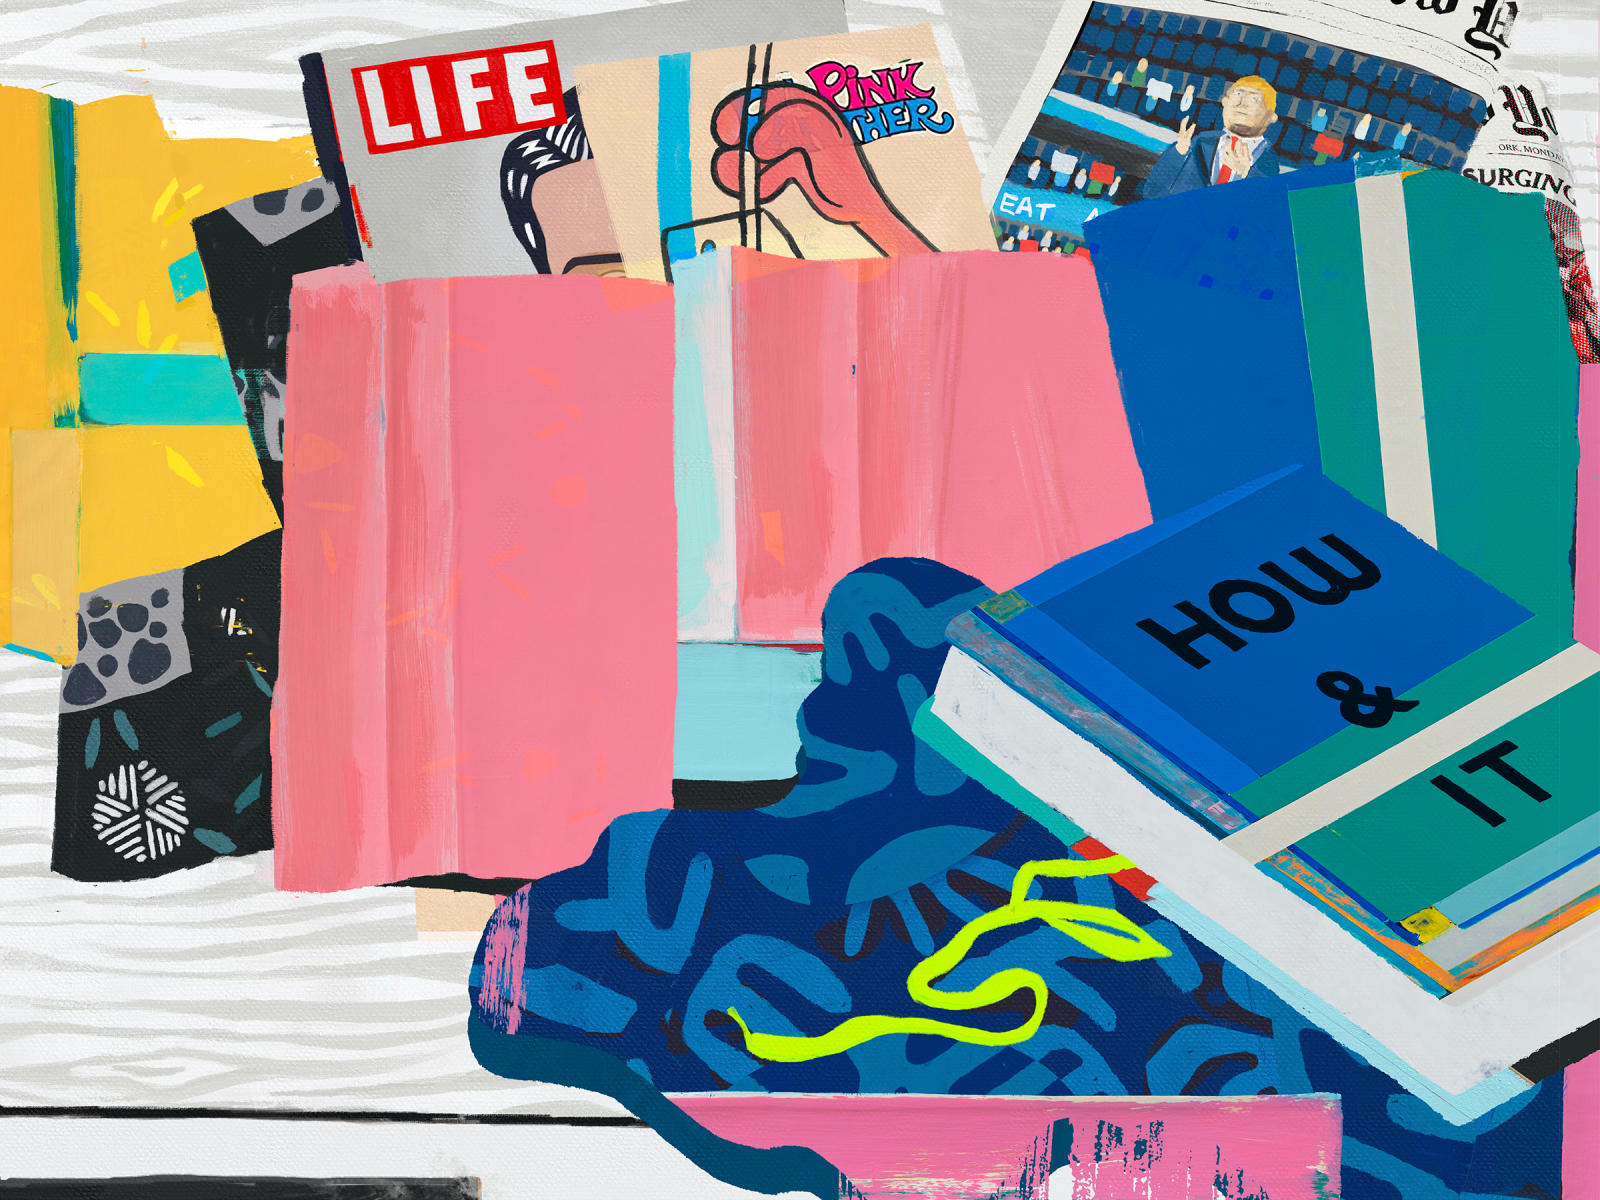 Detail of artwork depicting Life Magazine and Holt's art books.